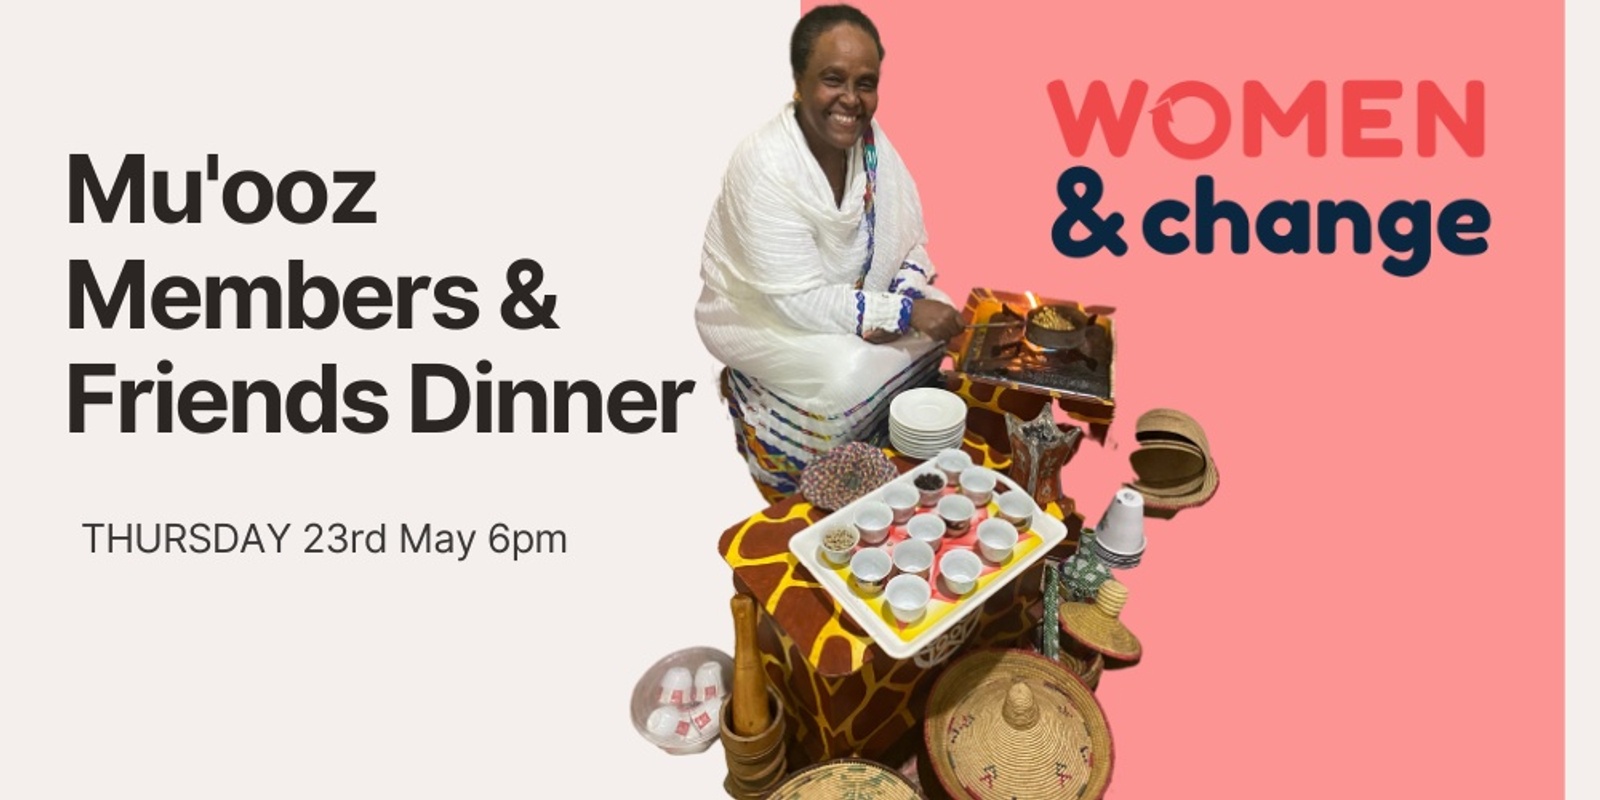 Banner image for Women & Change Members & Friends Dinner - Mu'ooz